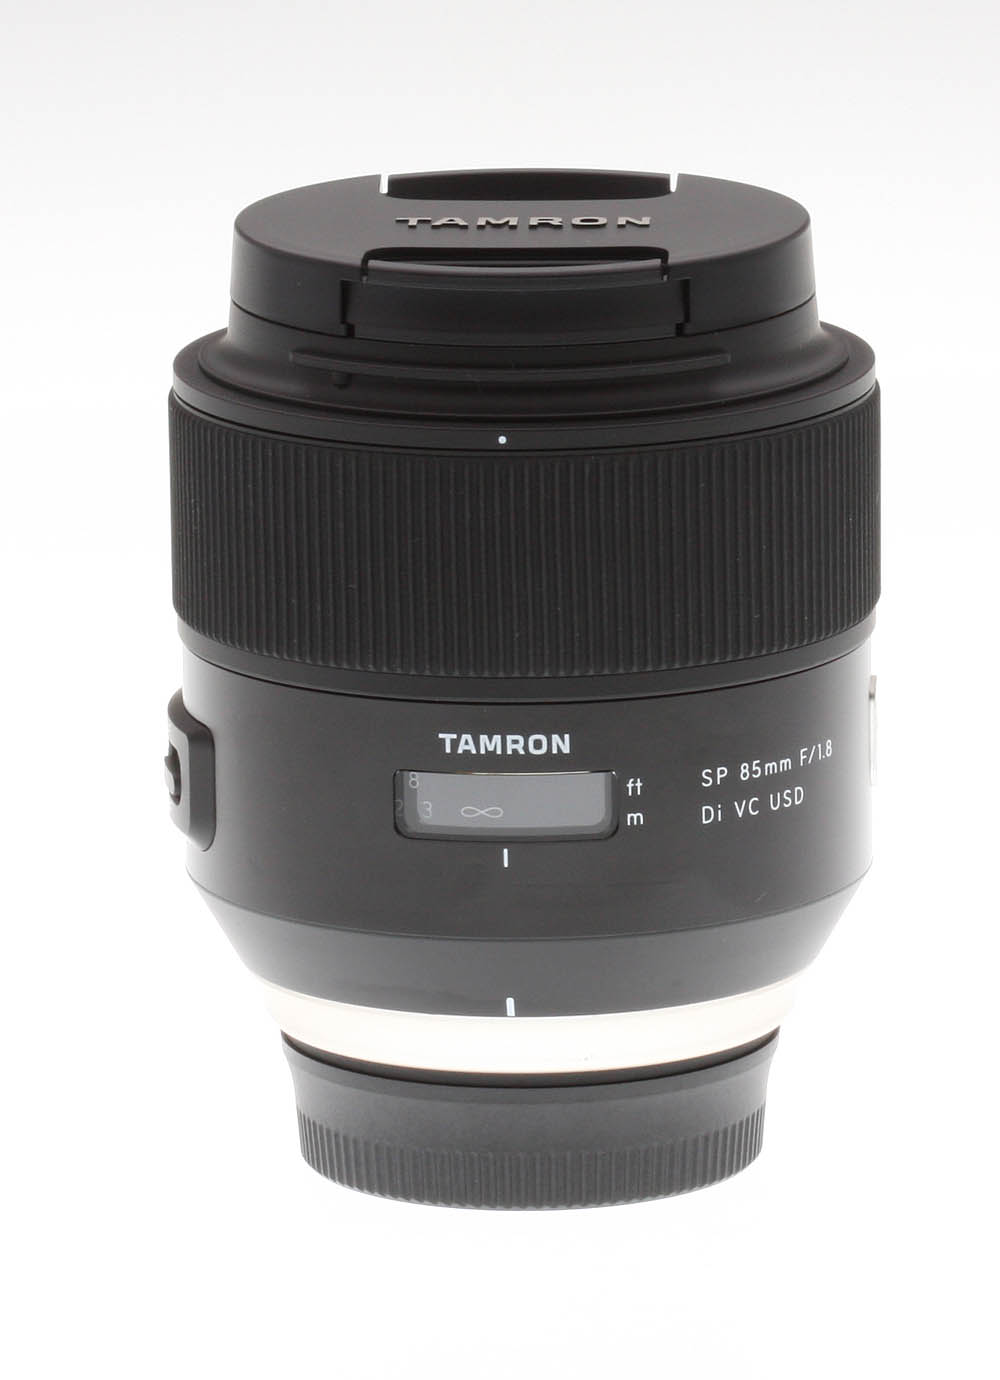 Tamron 85mm f/1.8 Di VC USD SP Review